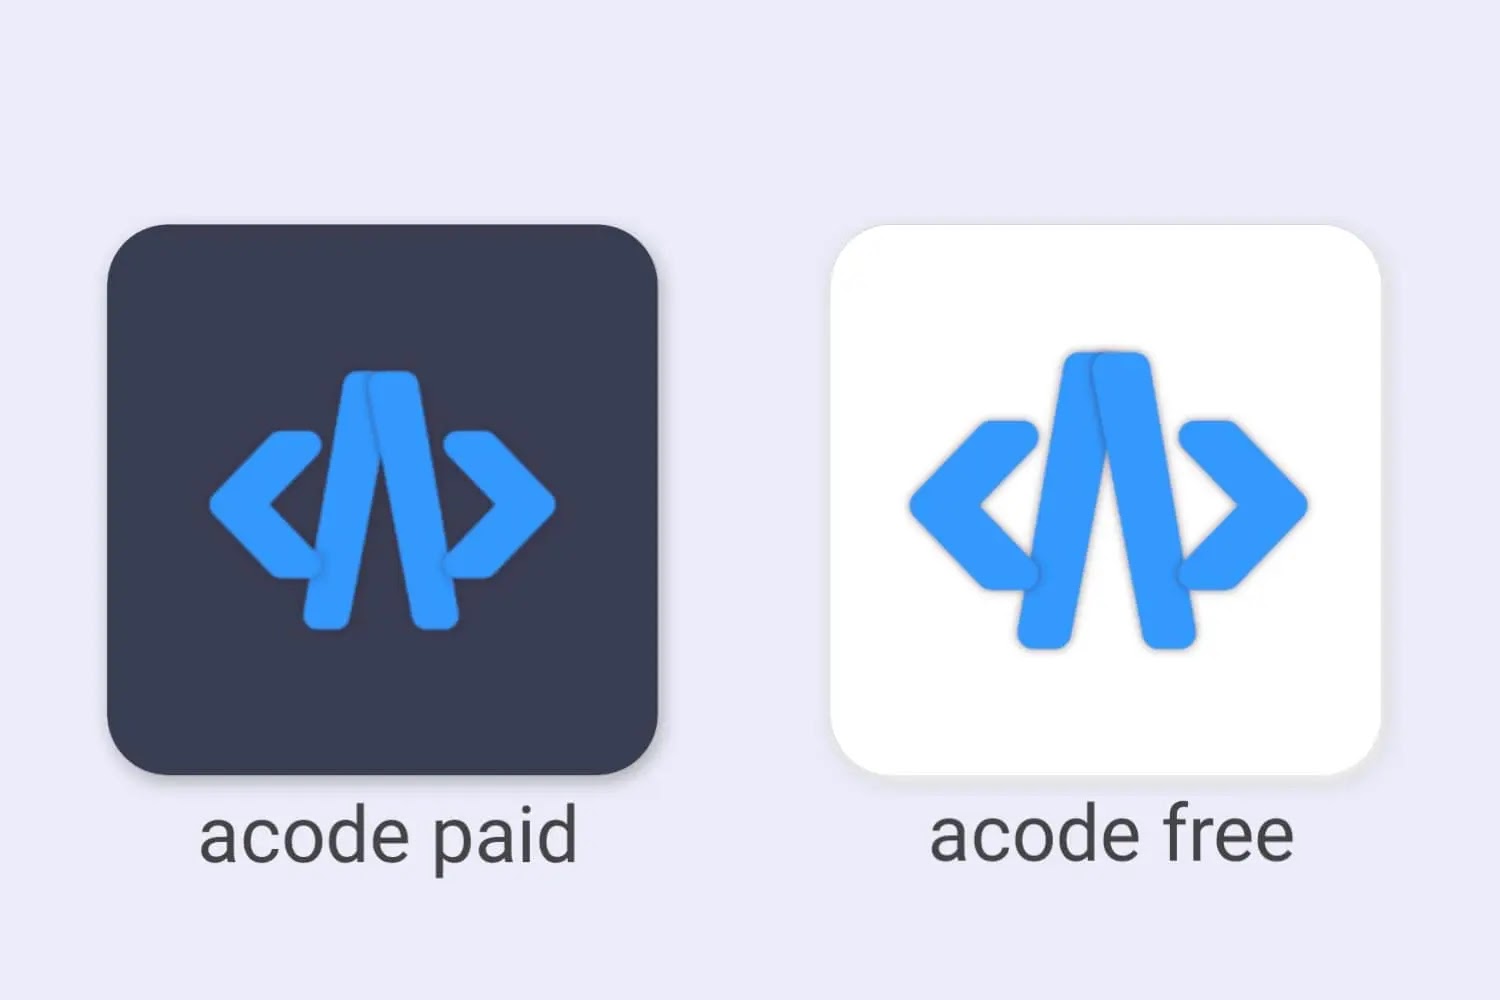 aplikasi acode paid vs acode free